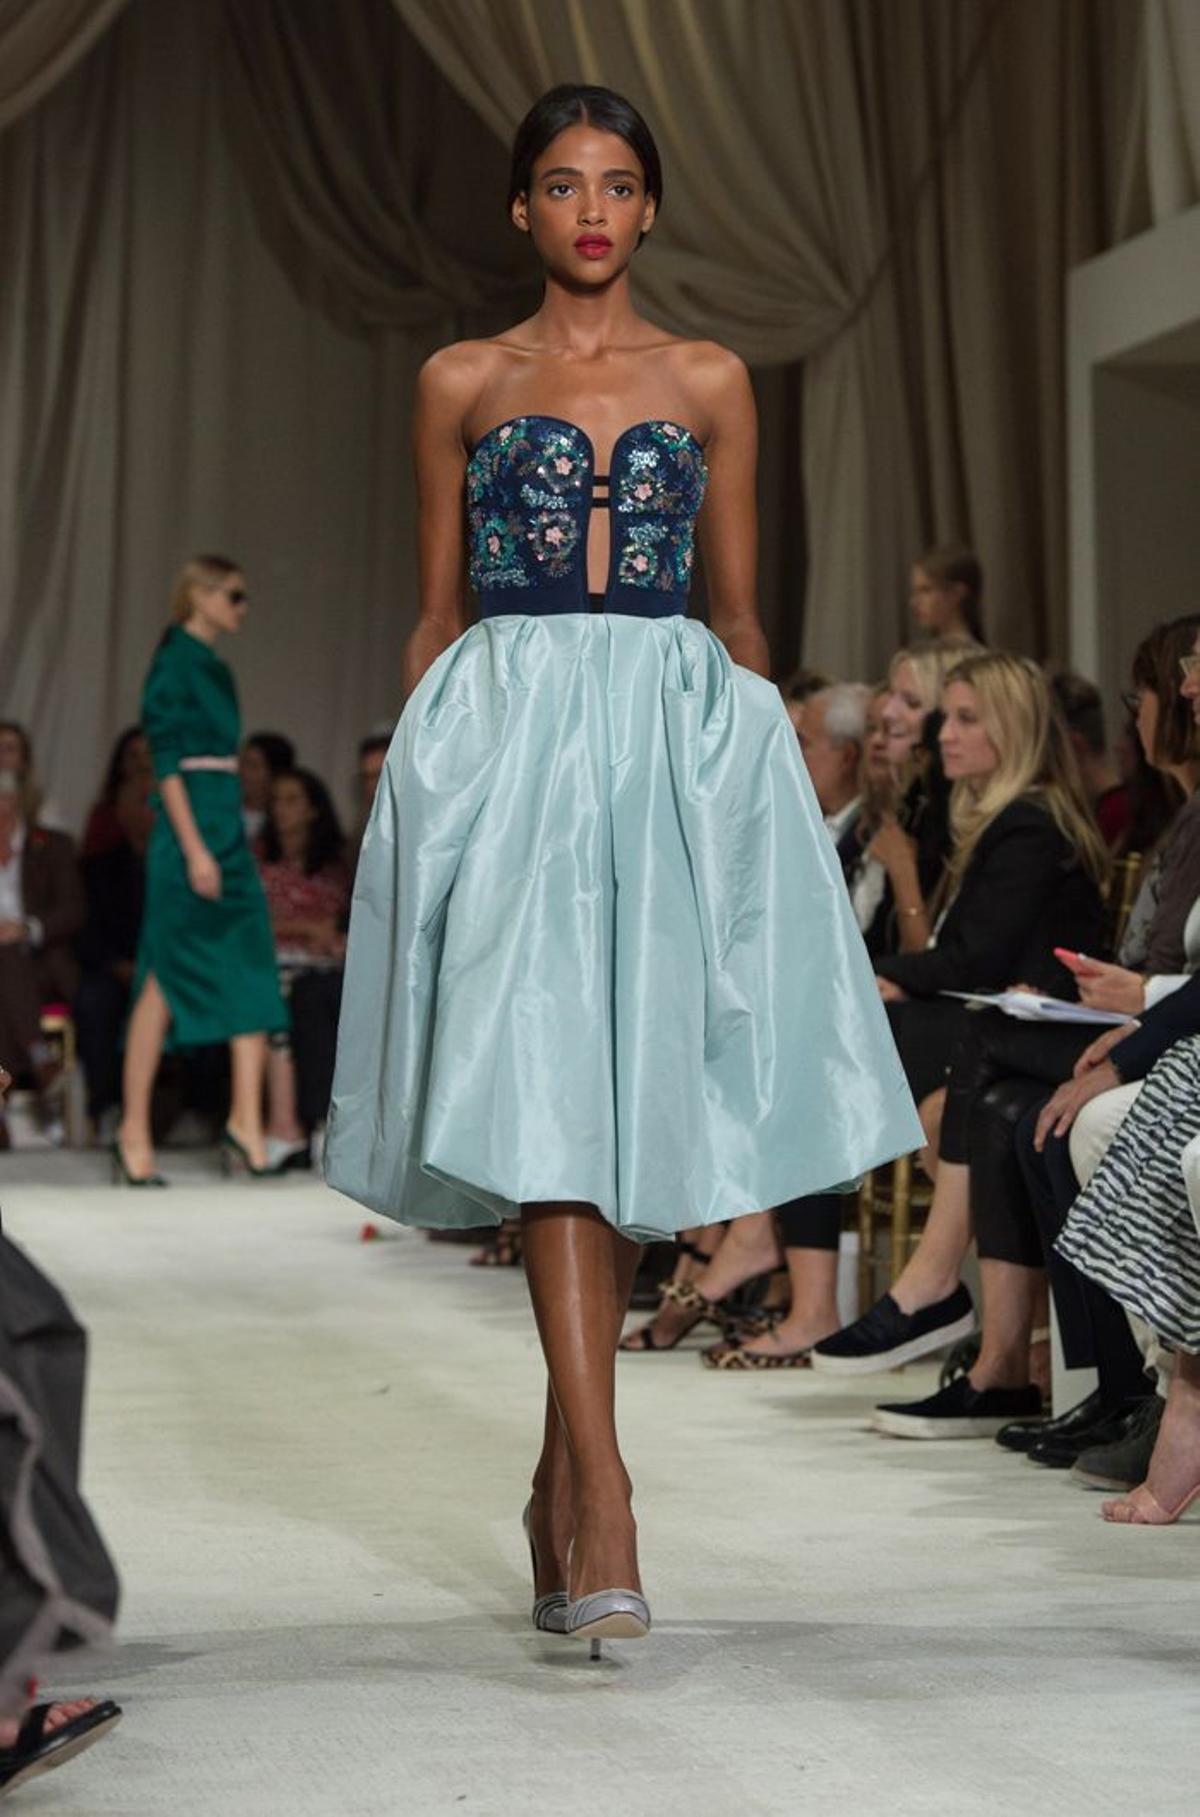 Nueva York Fashion Week: Óscar de la Renta, mini vestido azul